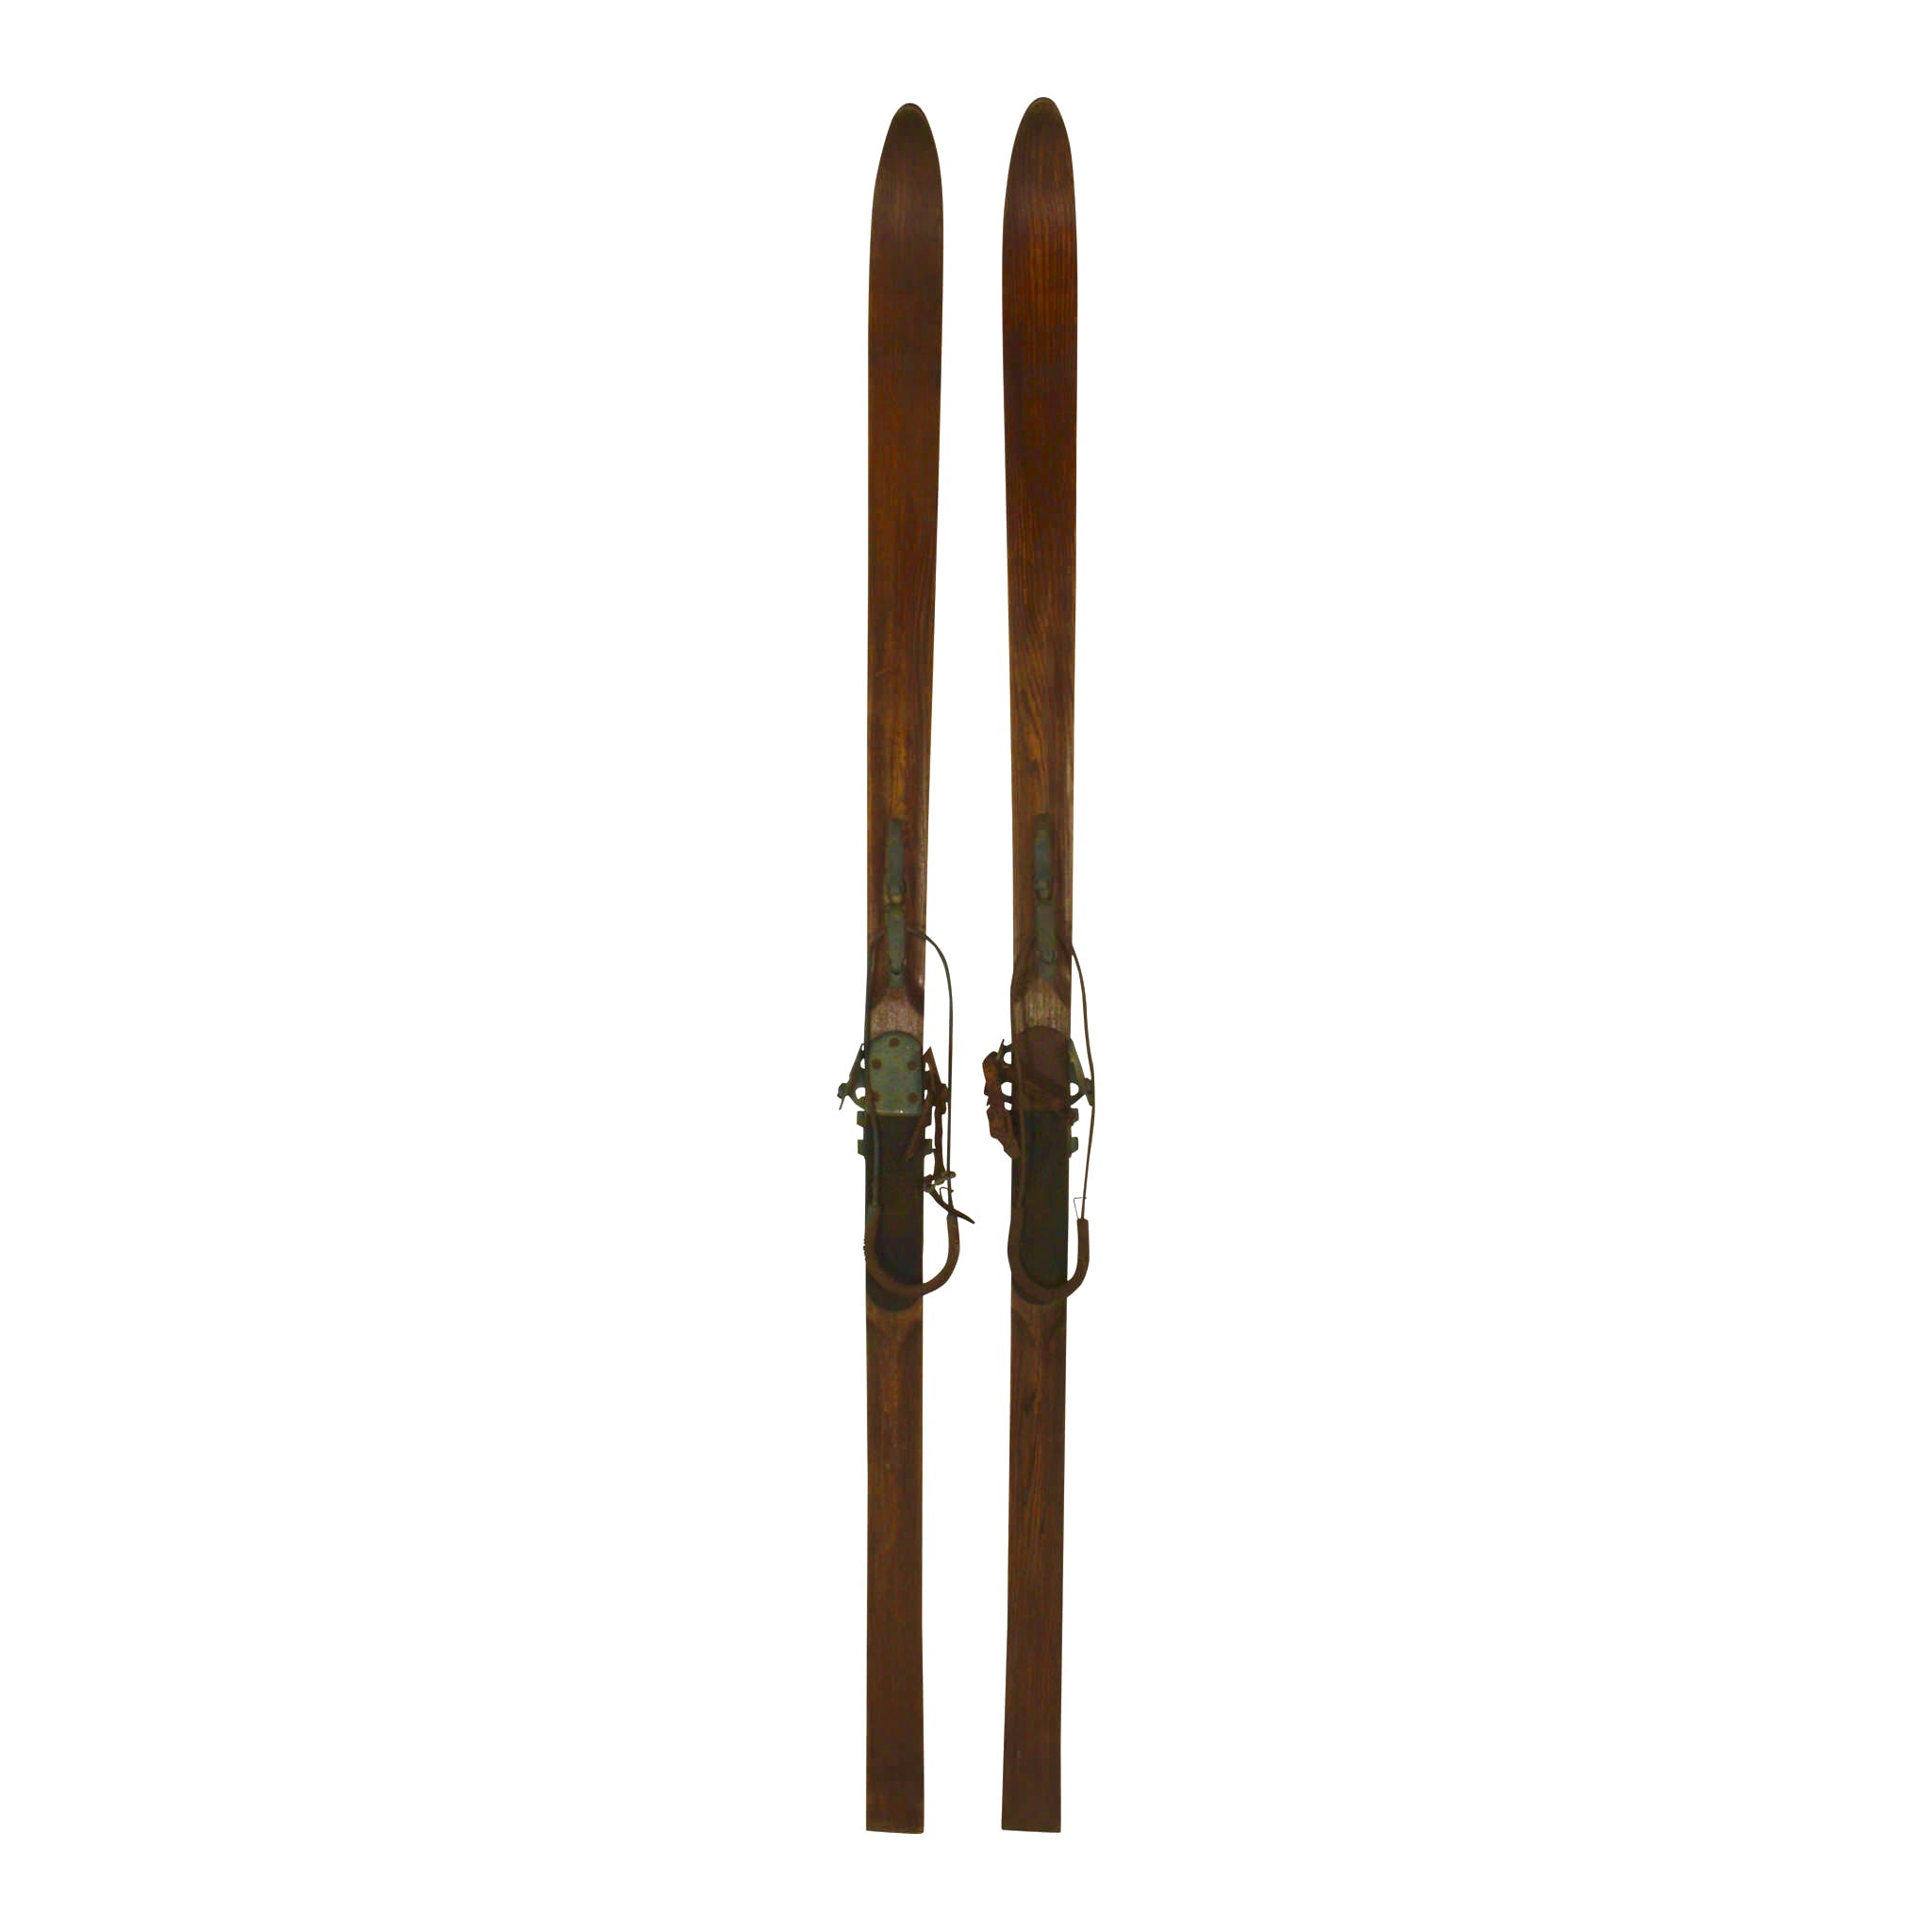 Wooden Skis with Inselberg Bindings